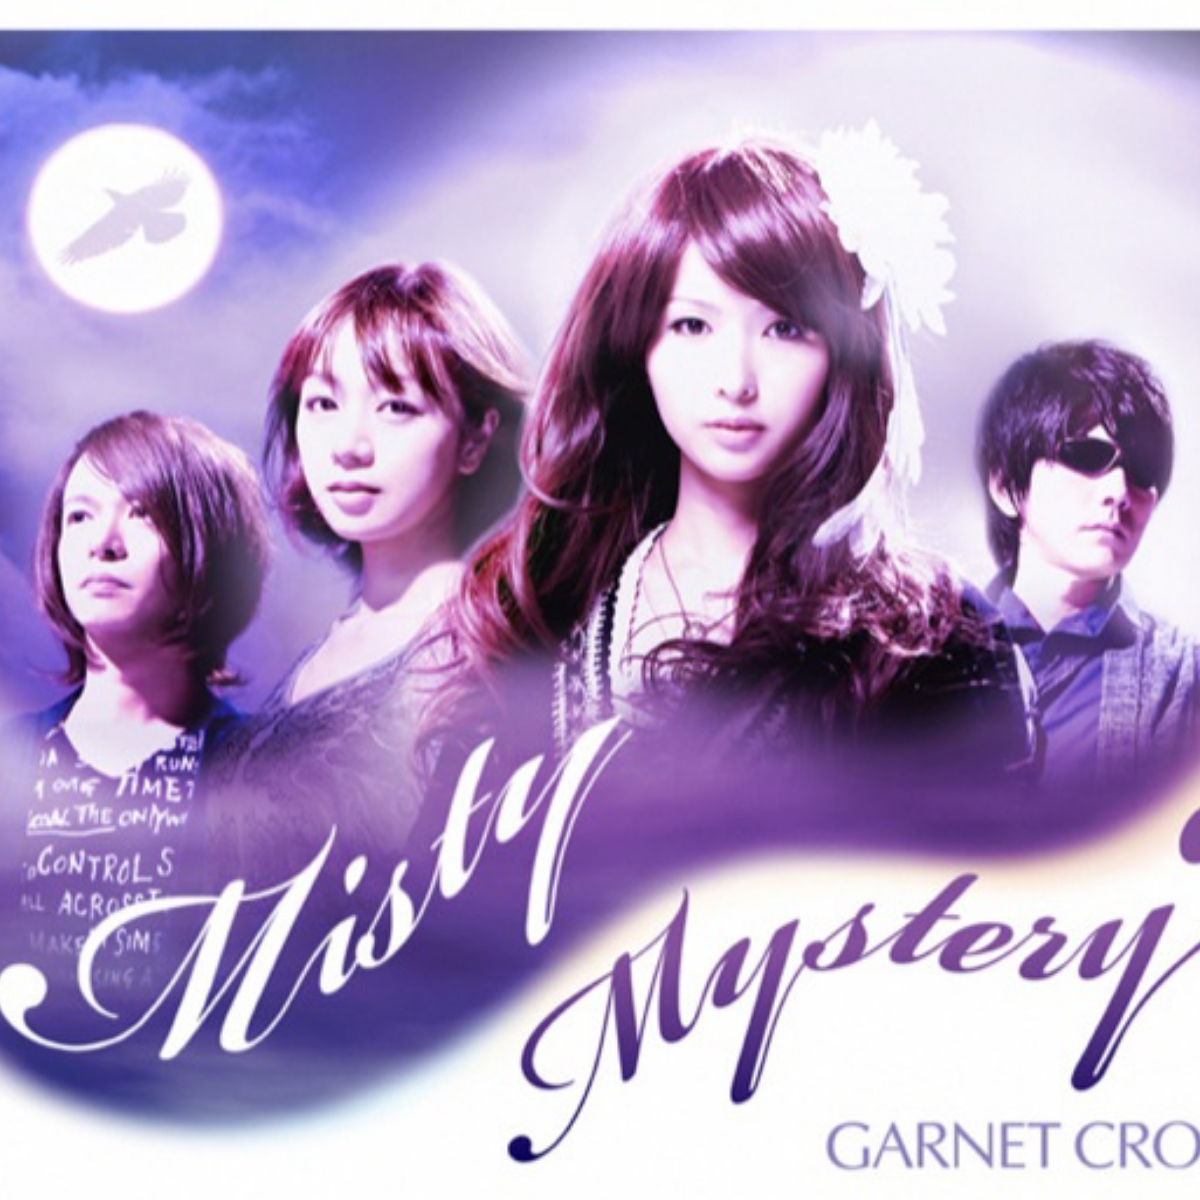 GARNET CROW - Misty Mystery